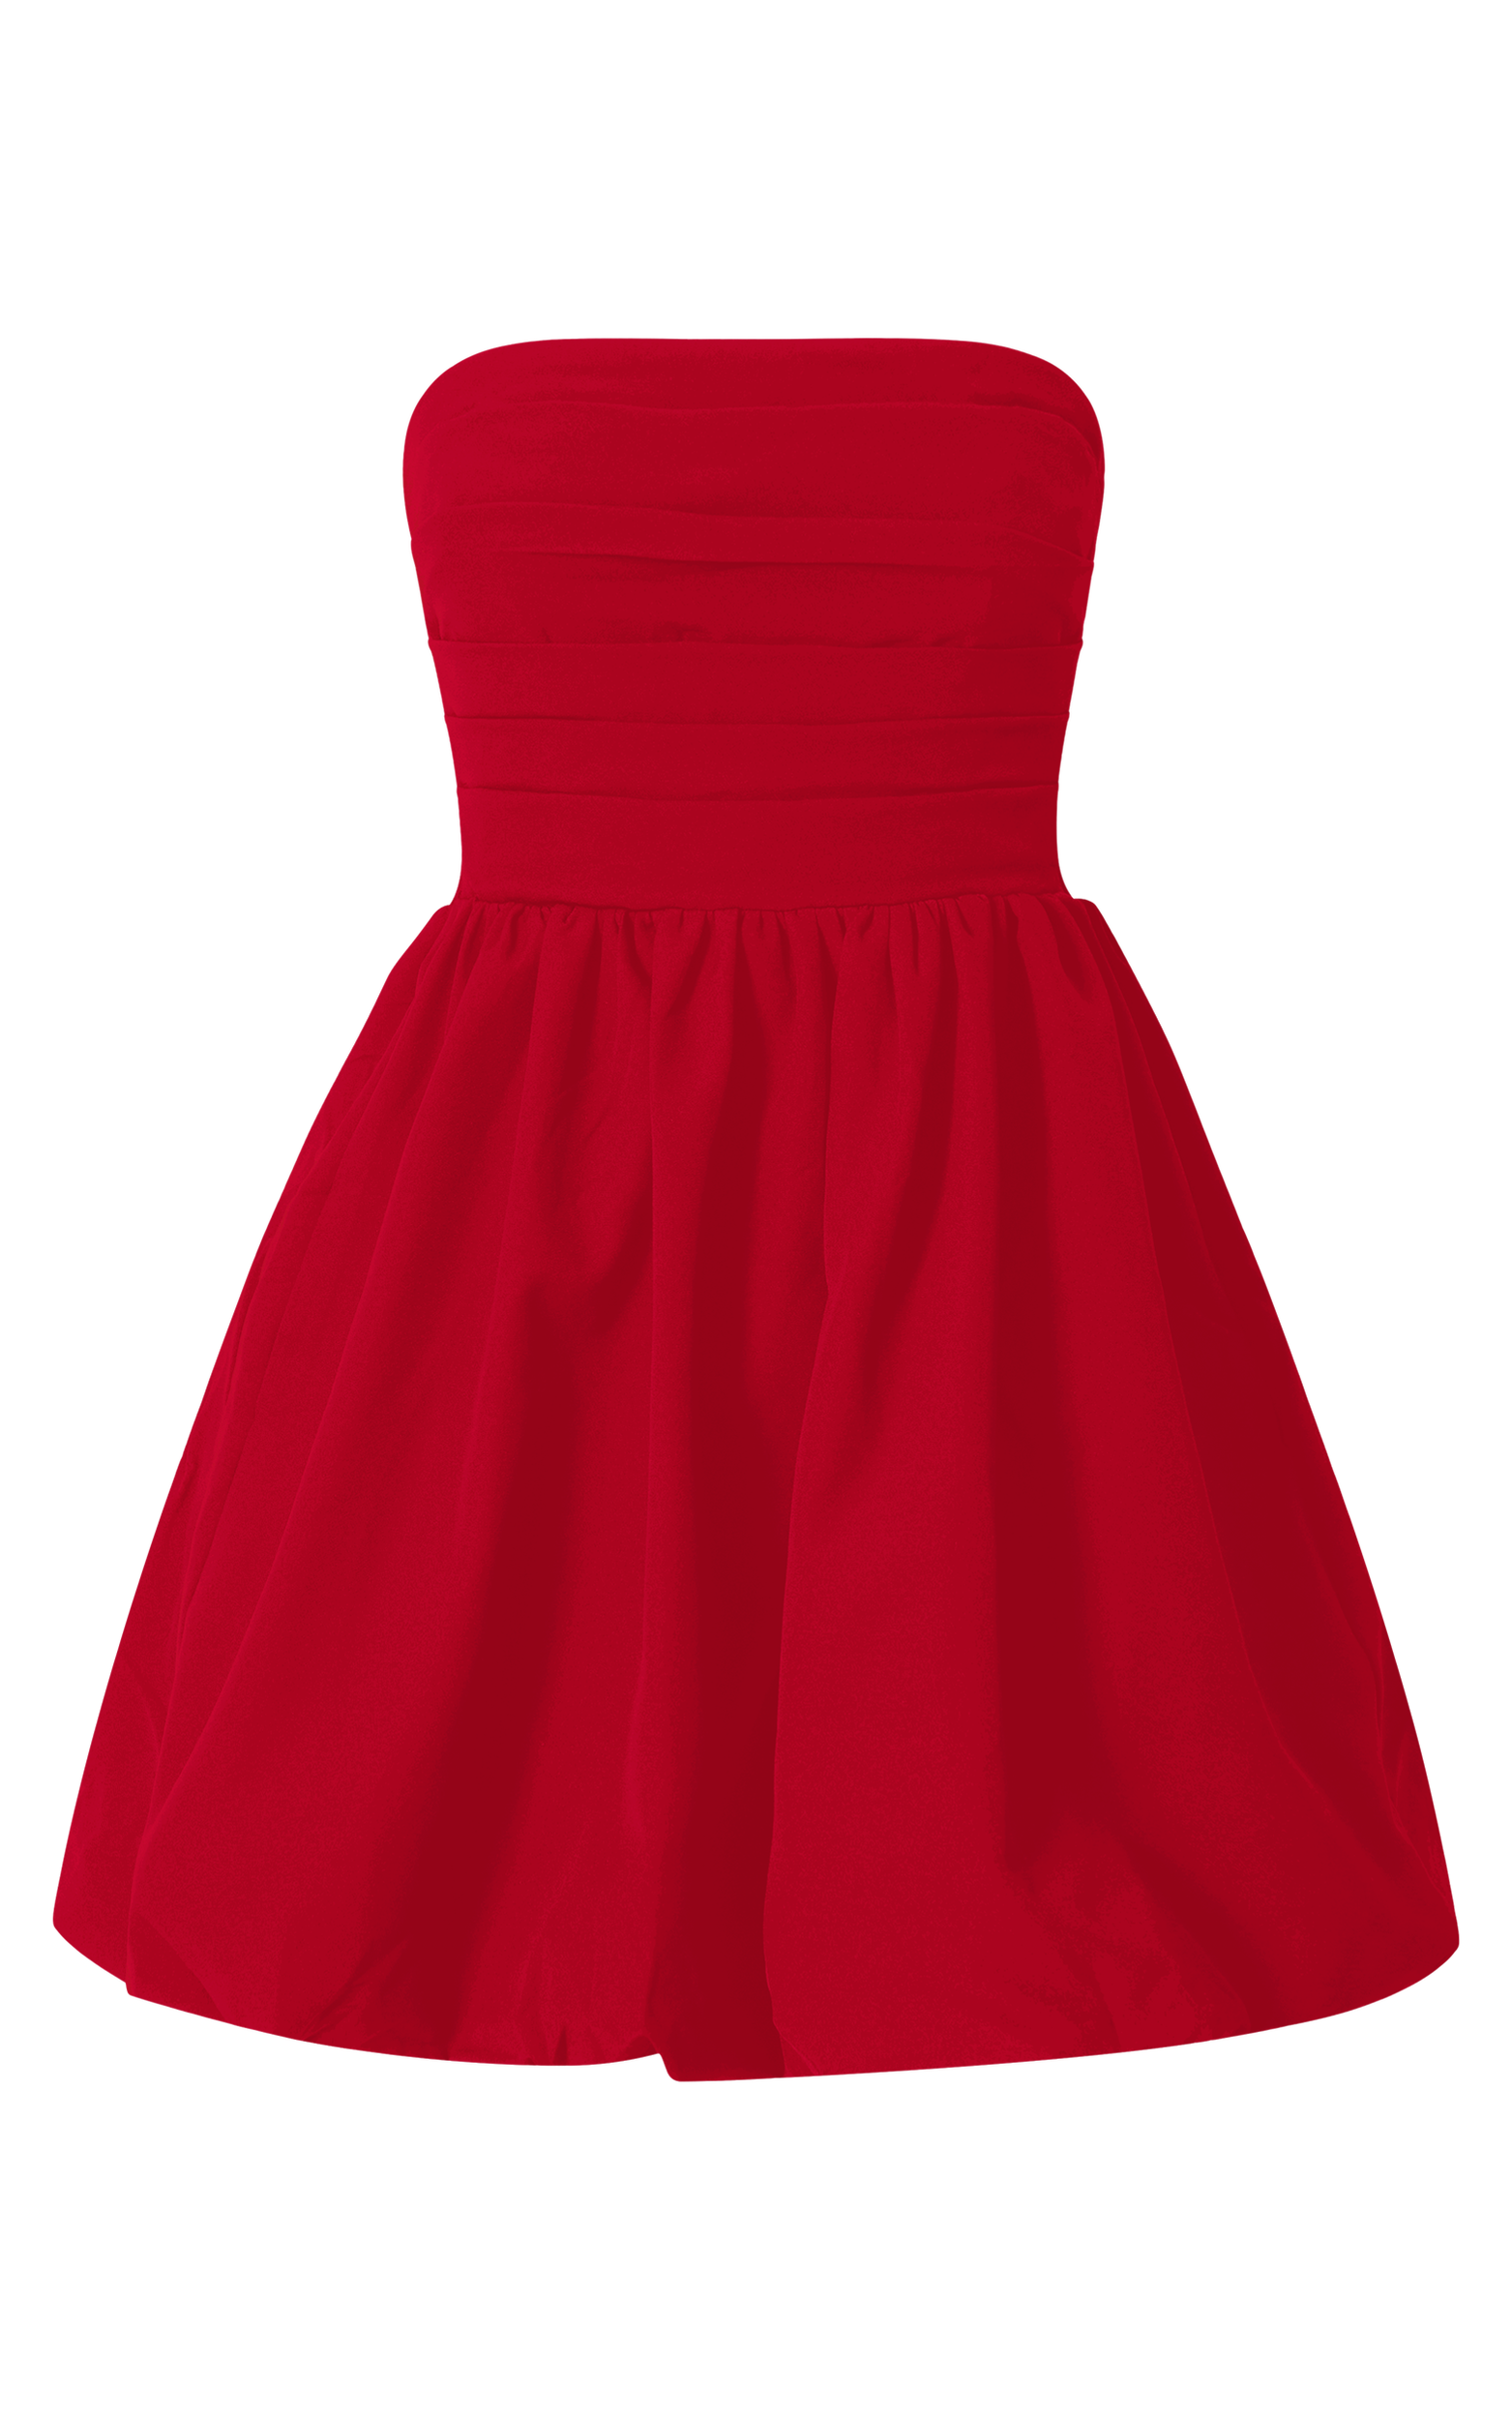 Shaima Mini Dress - Strapless Dress in Red